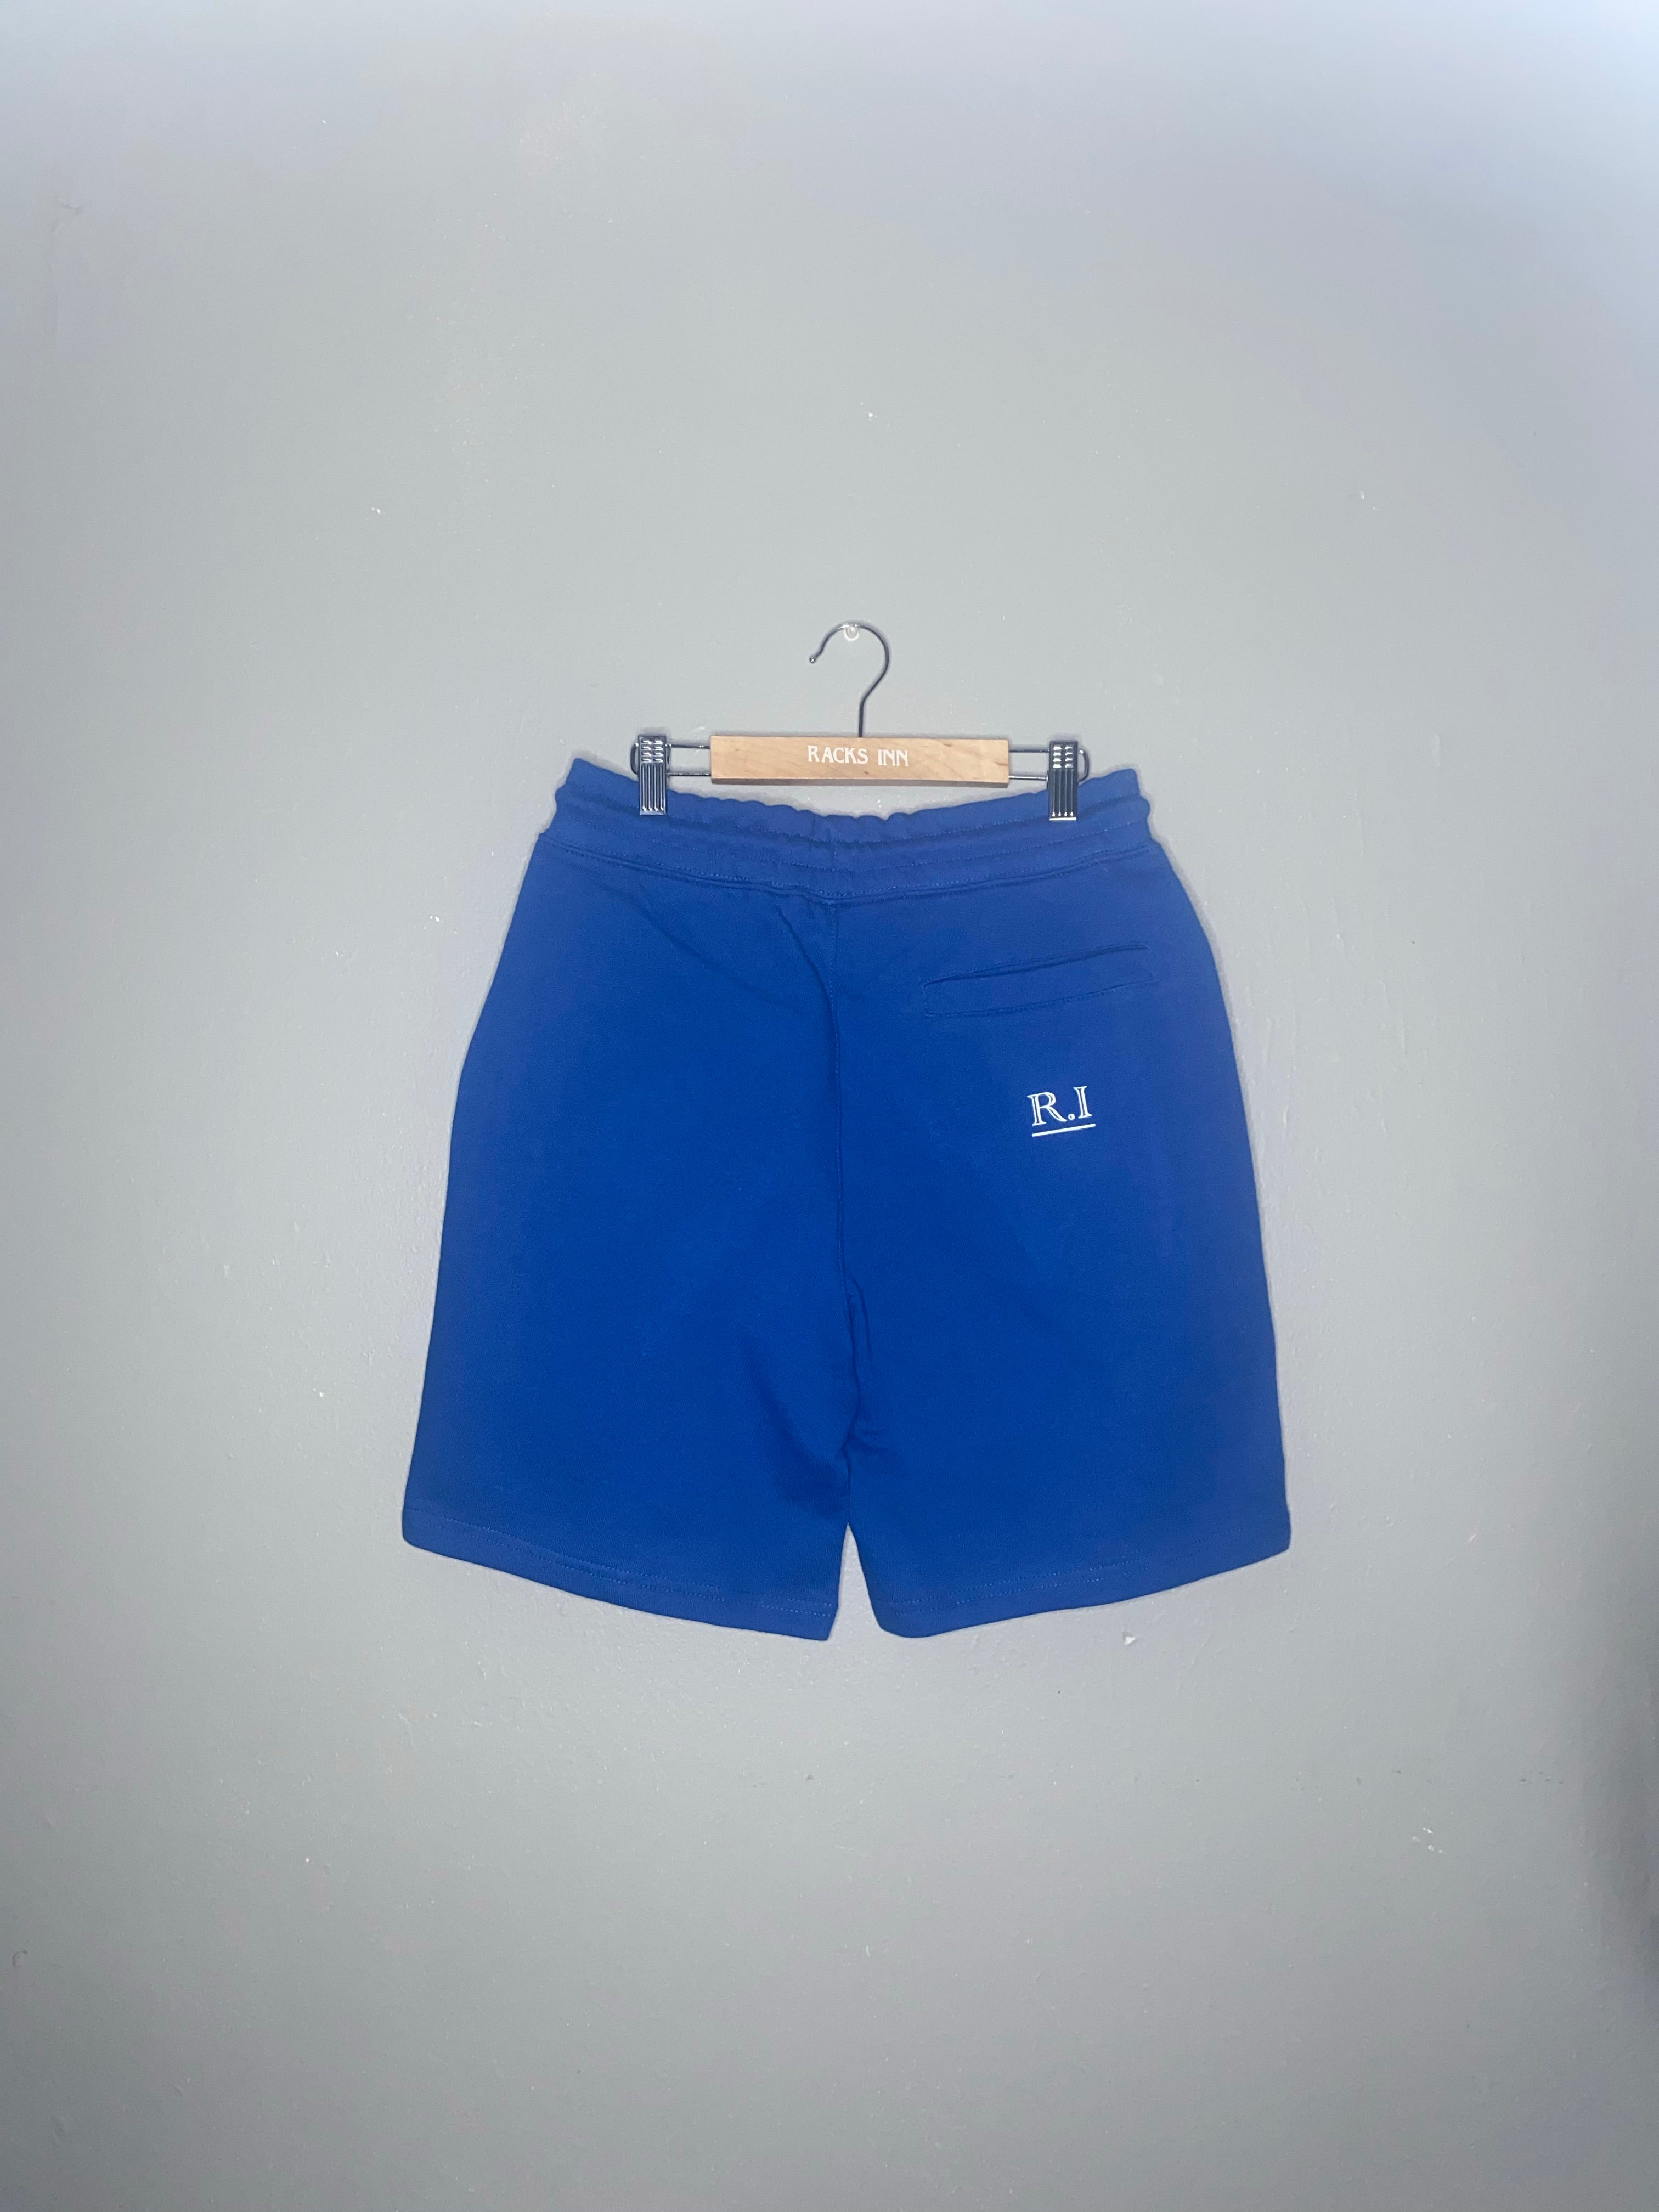 Euro Flex Shorts - French Blue